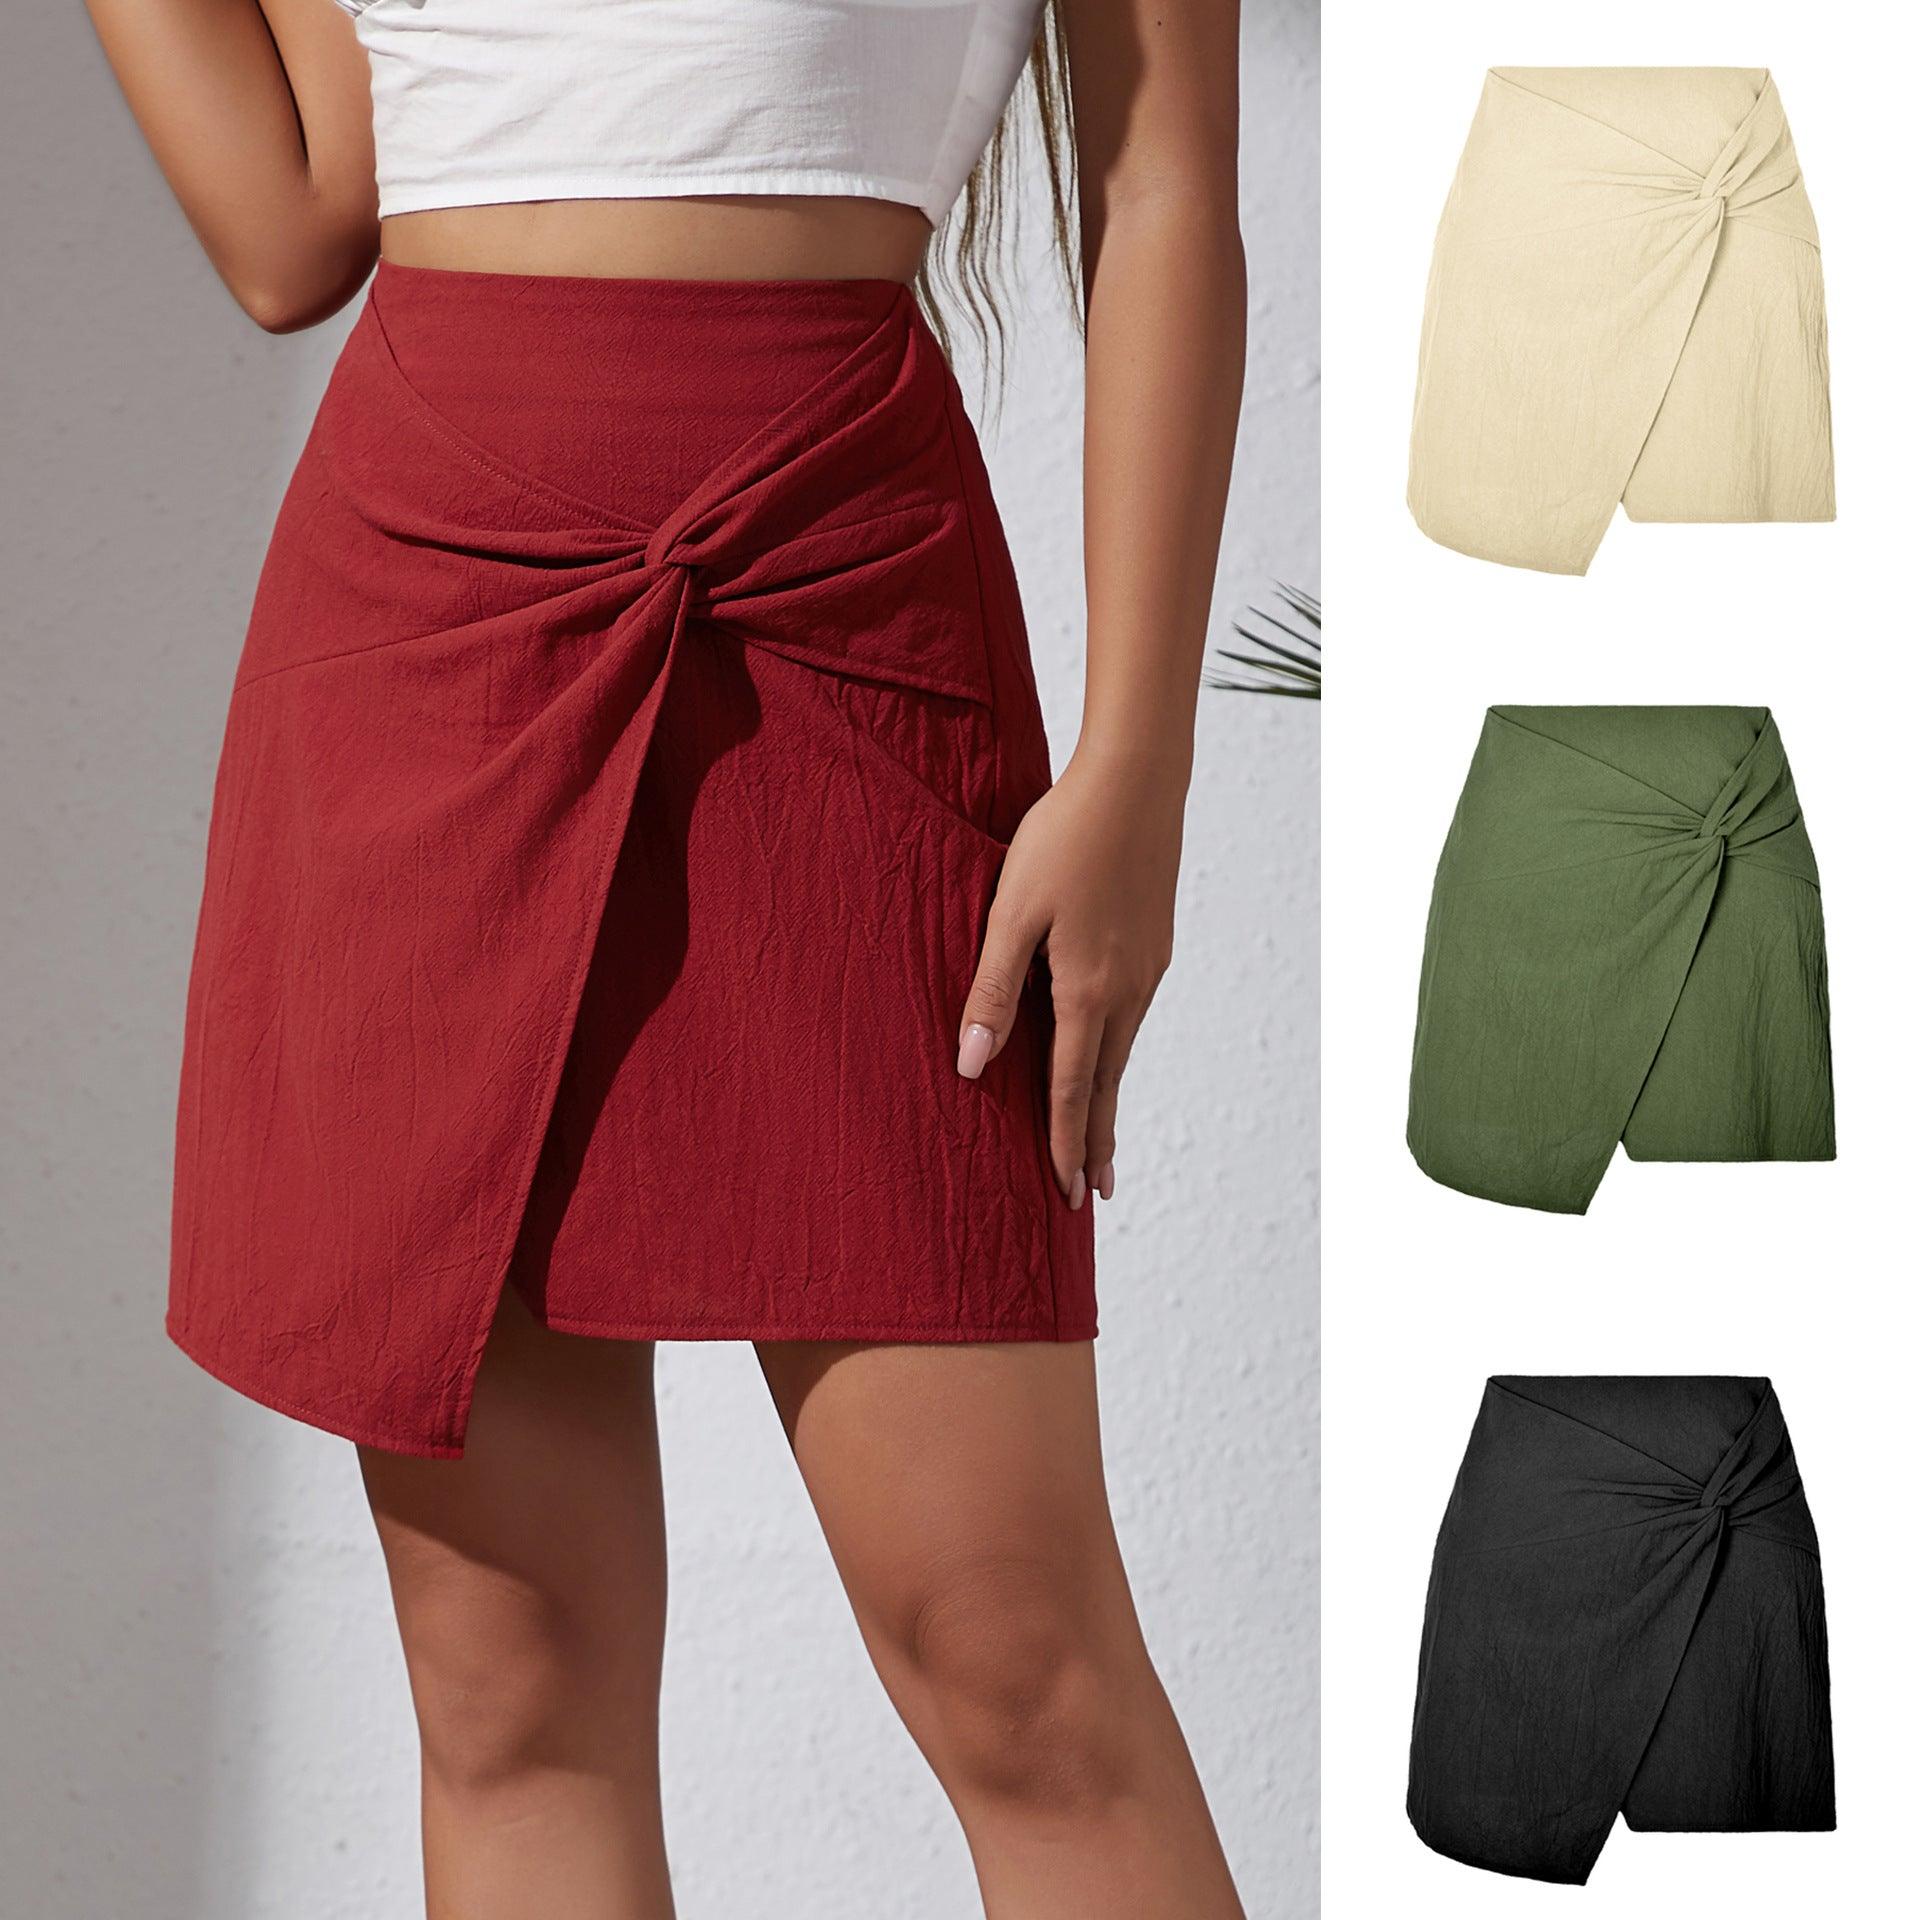 High-Waist Cotton-Linen Twisted Skirt for Women – Contemporary Short Style - Glinyt